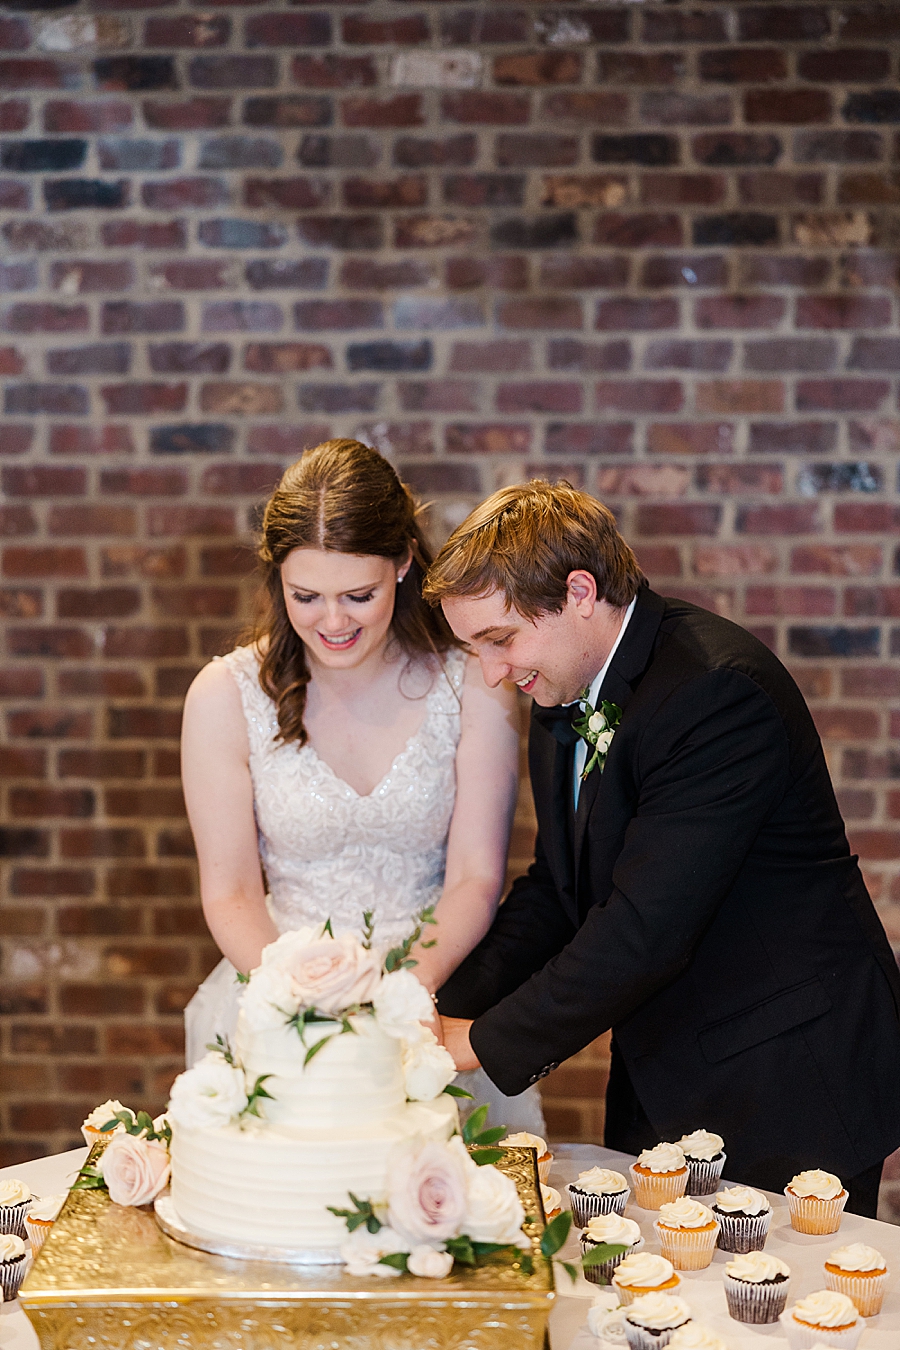 Couple cutting cake at wedding by Amanda May Photos